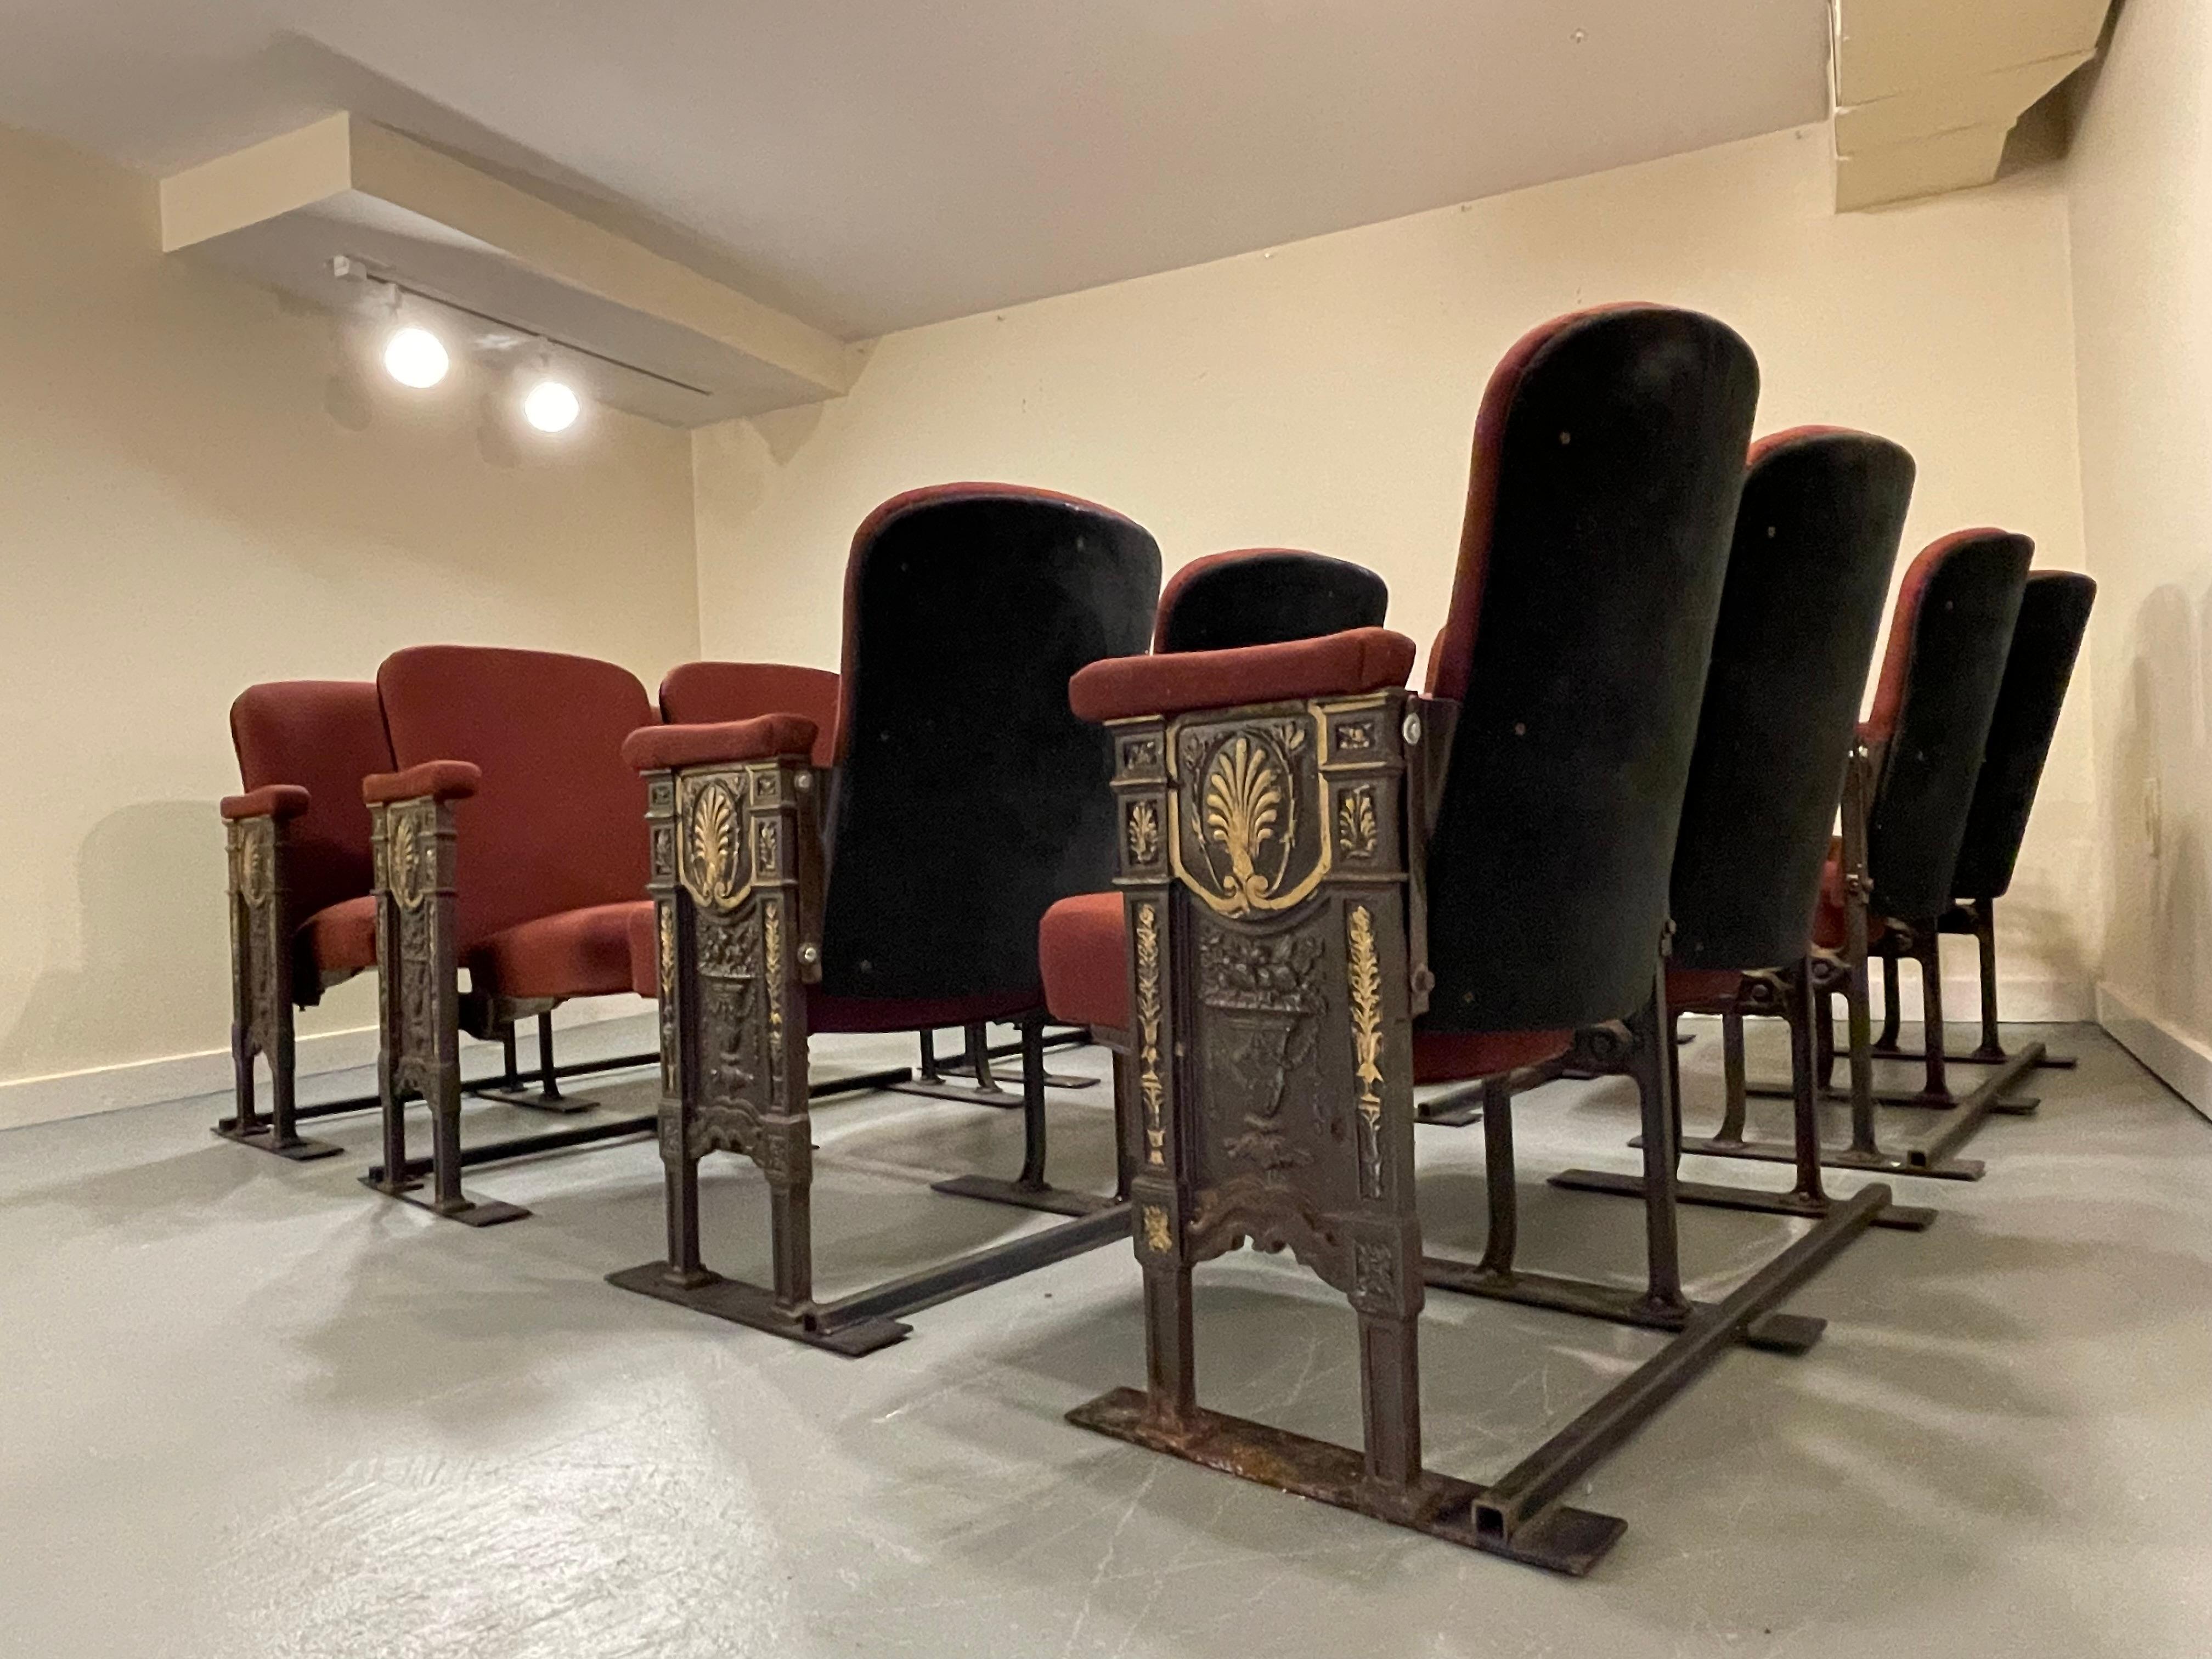 Early 20th Century Original Studio54 Newyork Art Deco Theater Seating Chairs